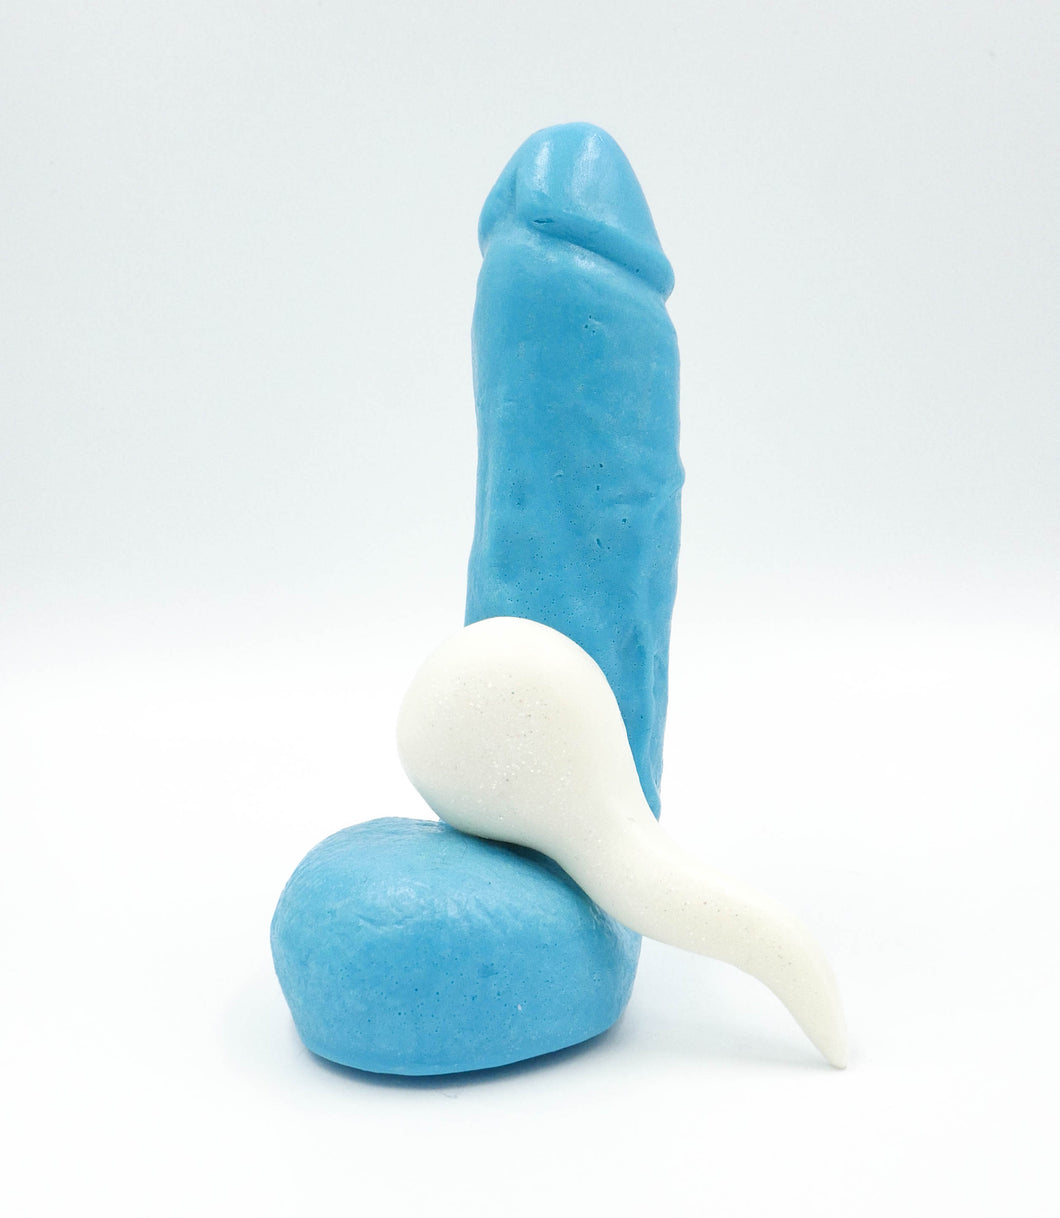 Stroker Jr' Blue Penis Party Soap with A Cute Spermie Soap ~ Blue Adult Penis Soap WHIMSICAL & NAUGHTY Dirty Clean Fun Blue 'Stroker JR' Soap with A Cute Spermie Soap  